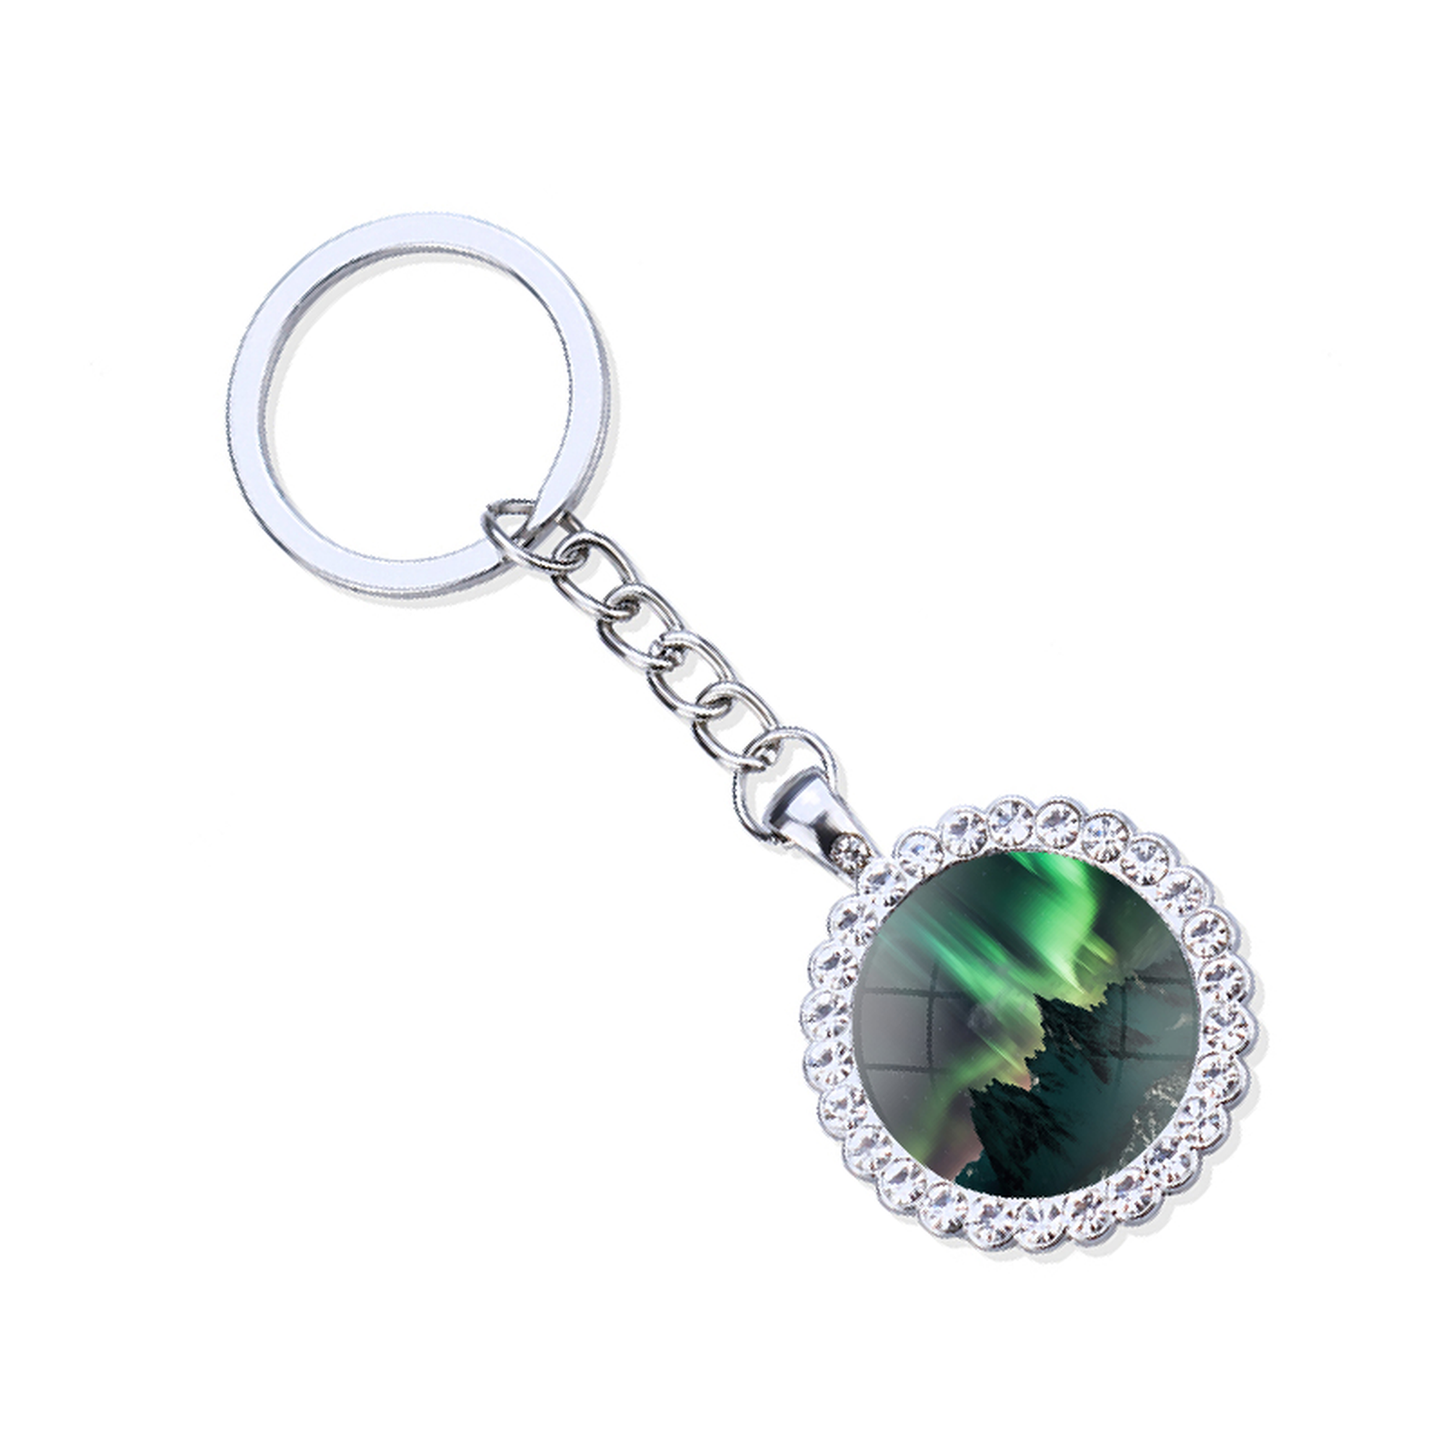 Aurora Borealis Silver Keyring - Northern Light Jewelry - Rhinestones Glass Key Chain - Perfect Aurora Lovers Gift 8